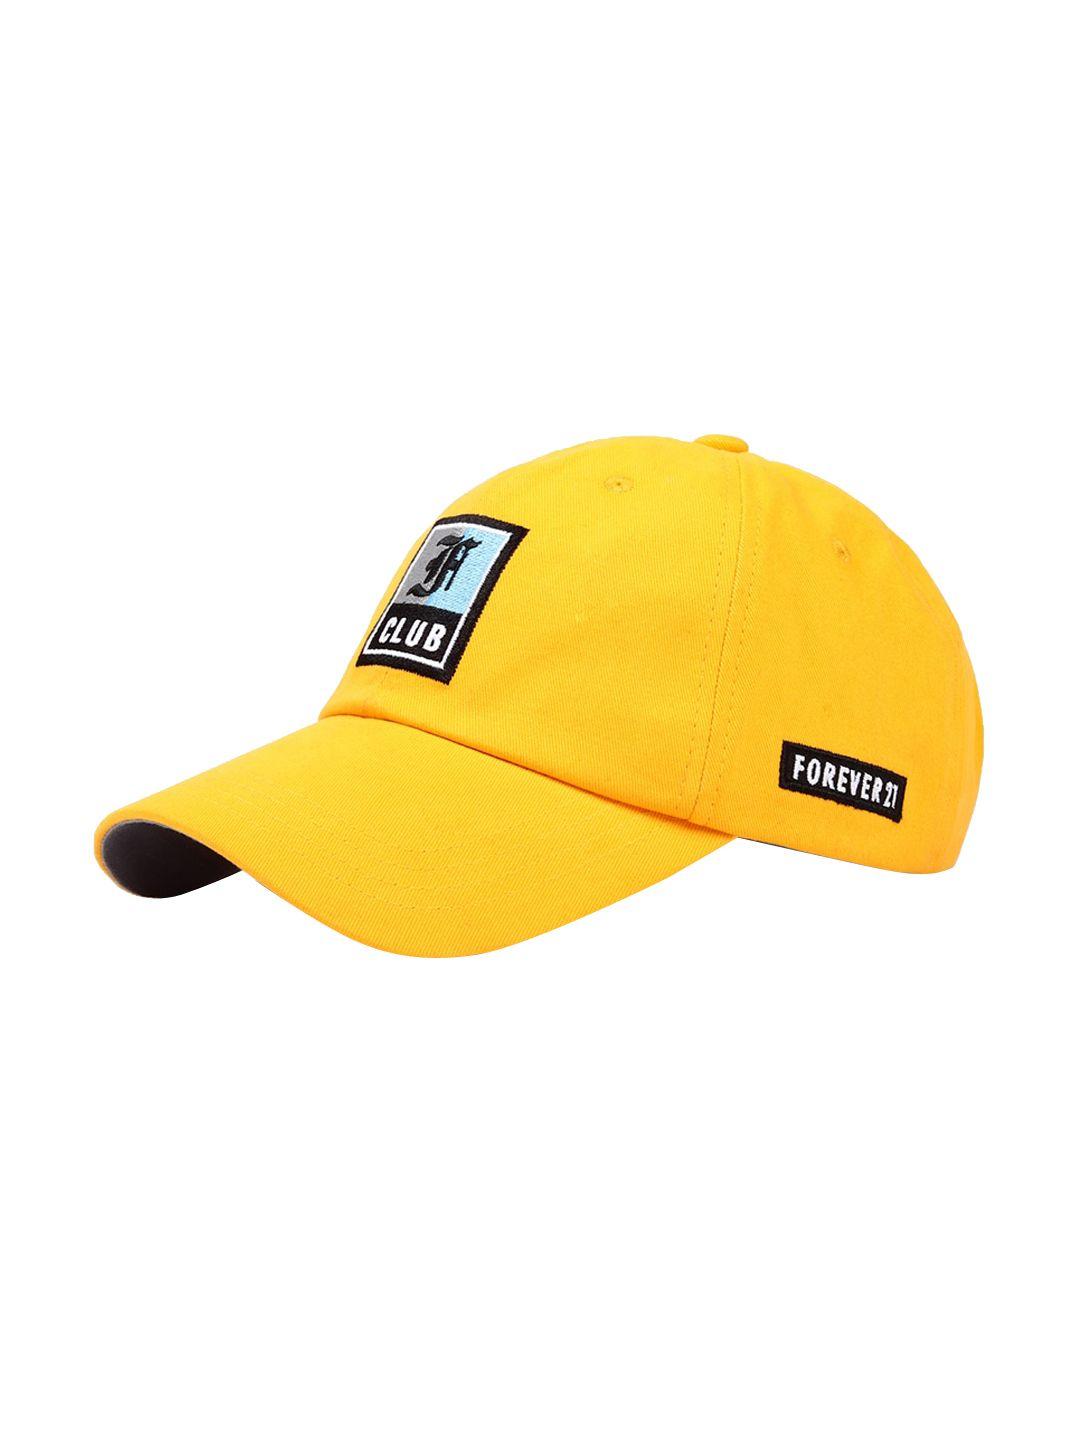 forever-21-men-yellow-embroidered-baseball-cap